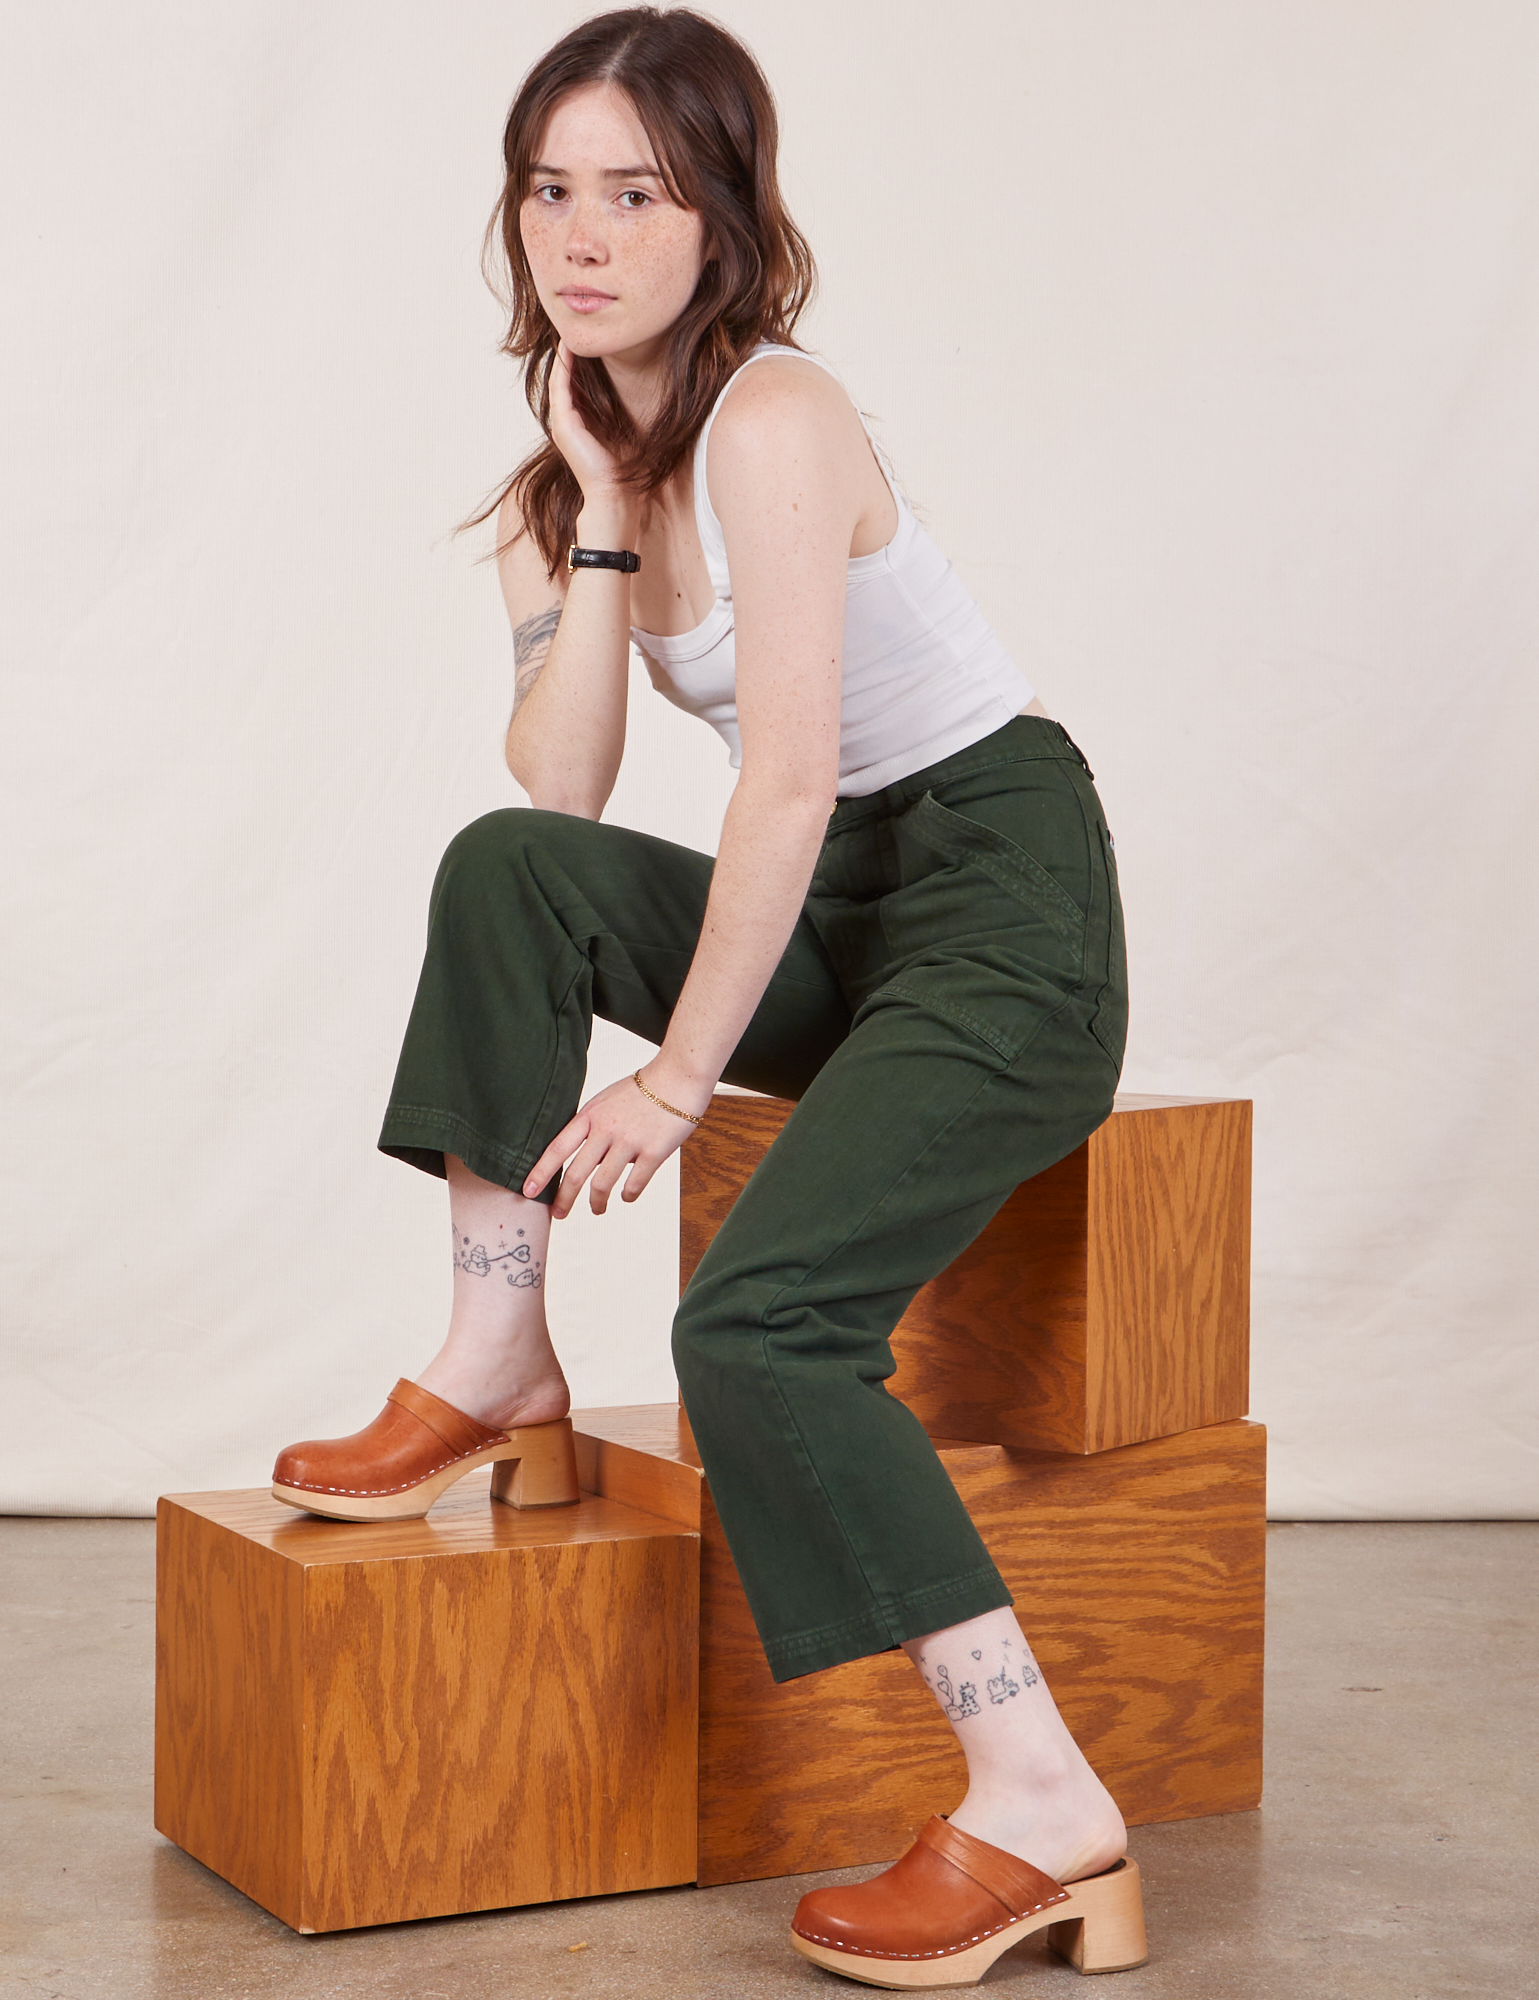 Hana is wearing Petite Work Pants in Swamp Green and Cropped Tank Top in vintage tee off-white